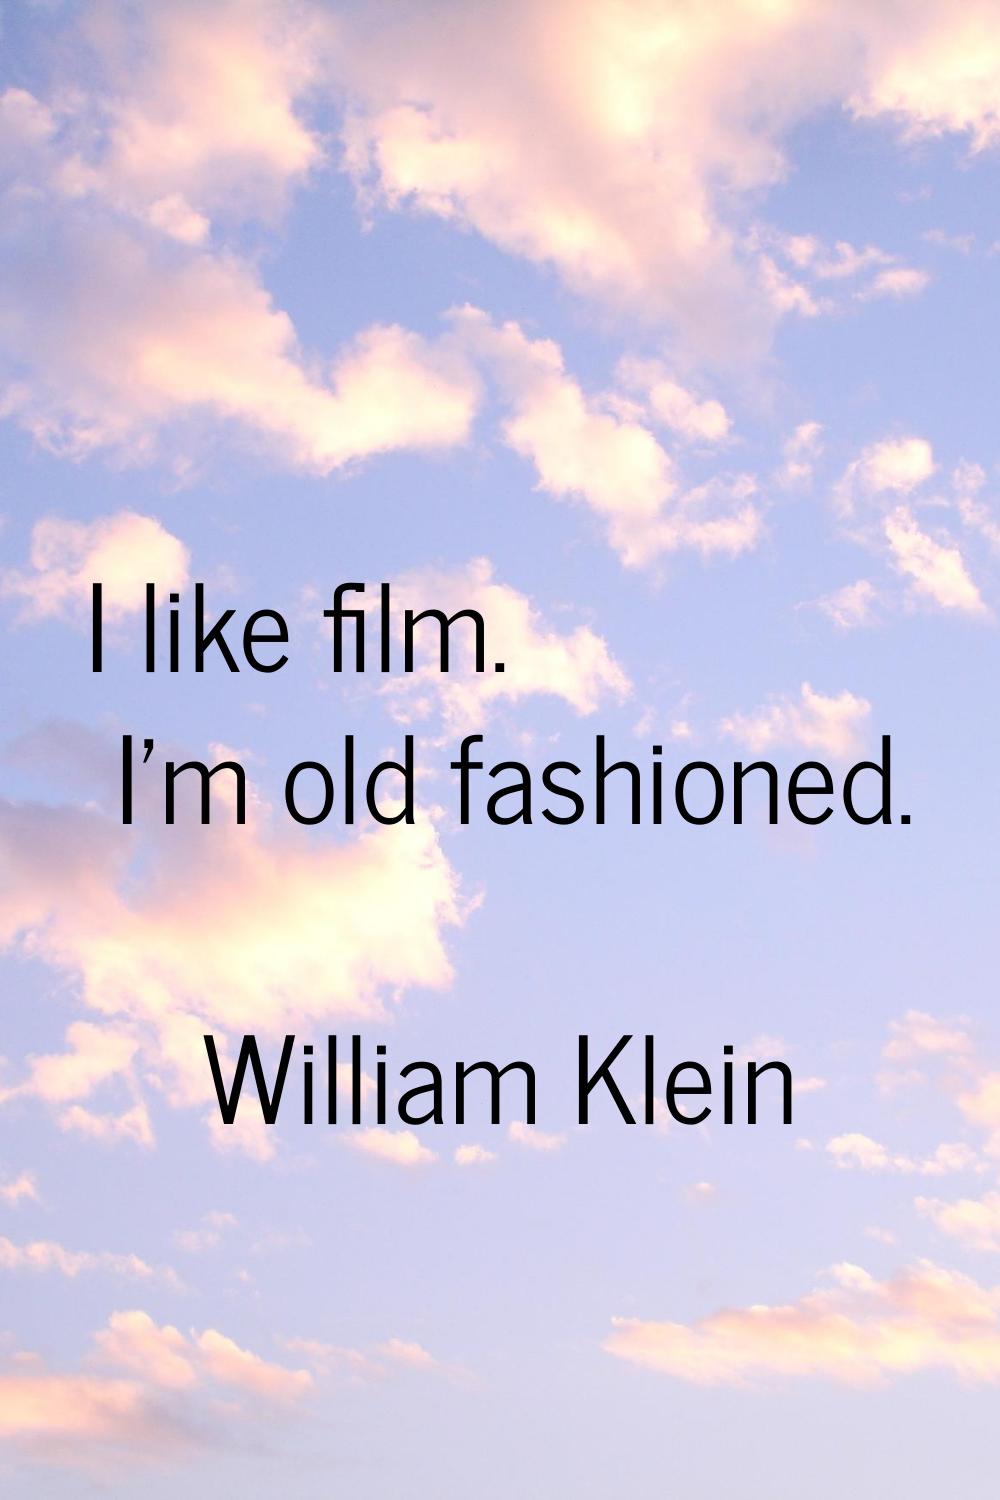 I like film. I'm old fashioned.